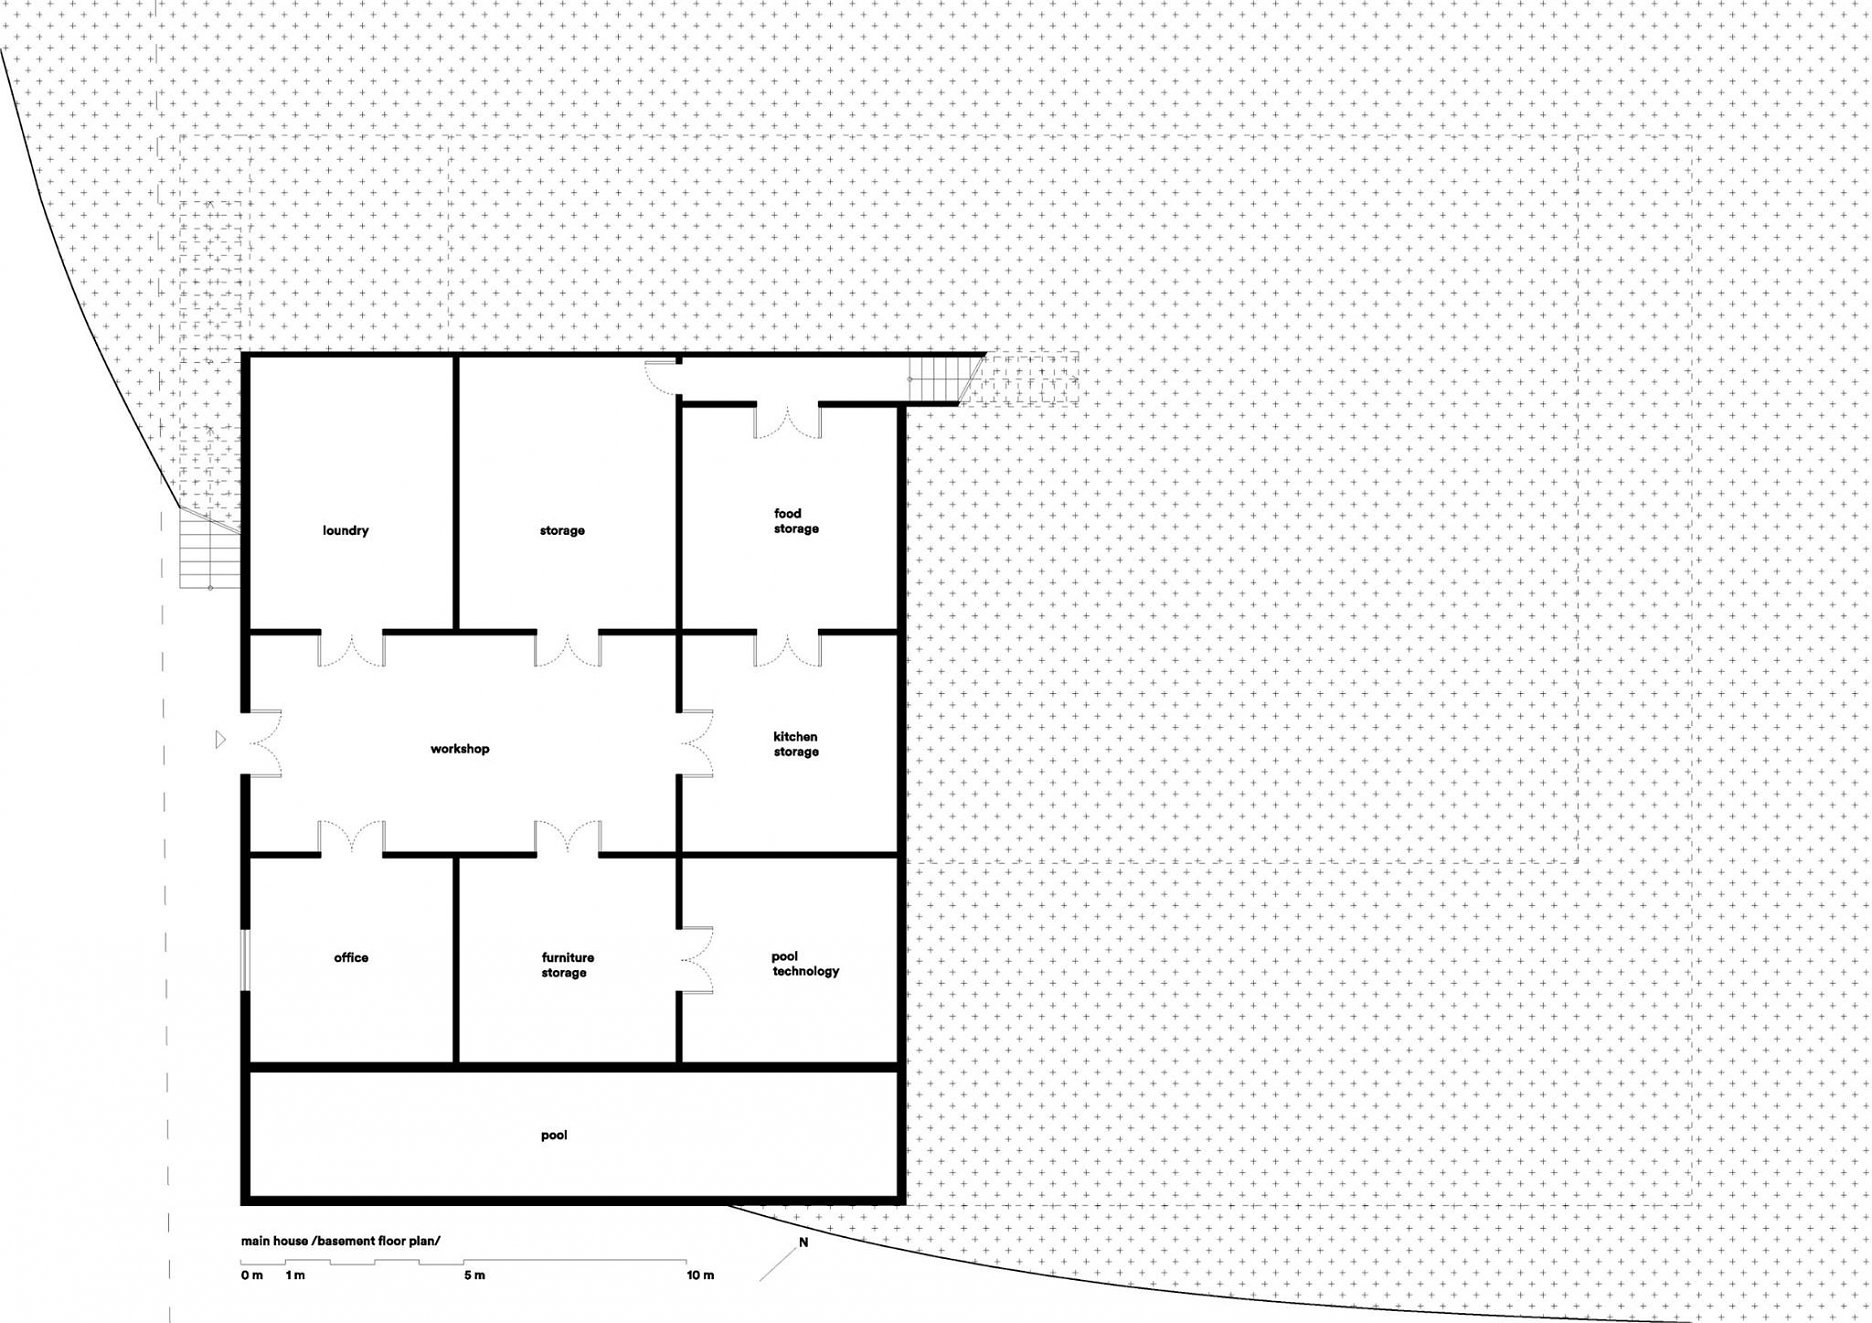 Main house - basement floor plan